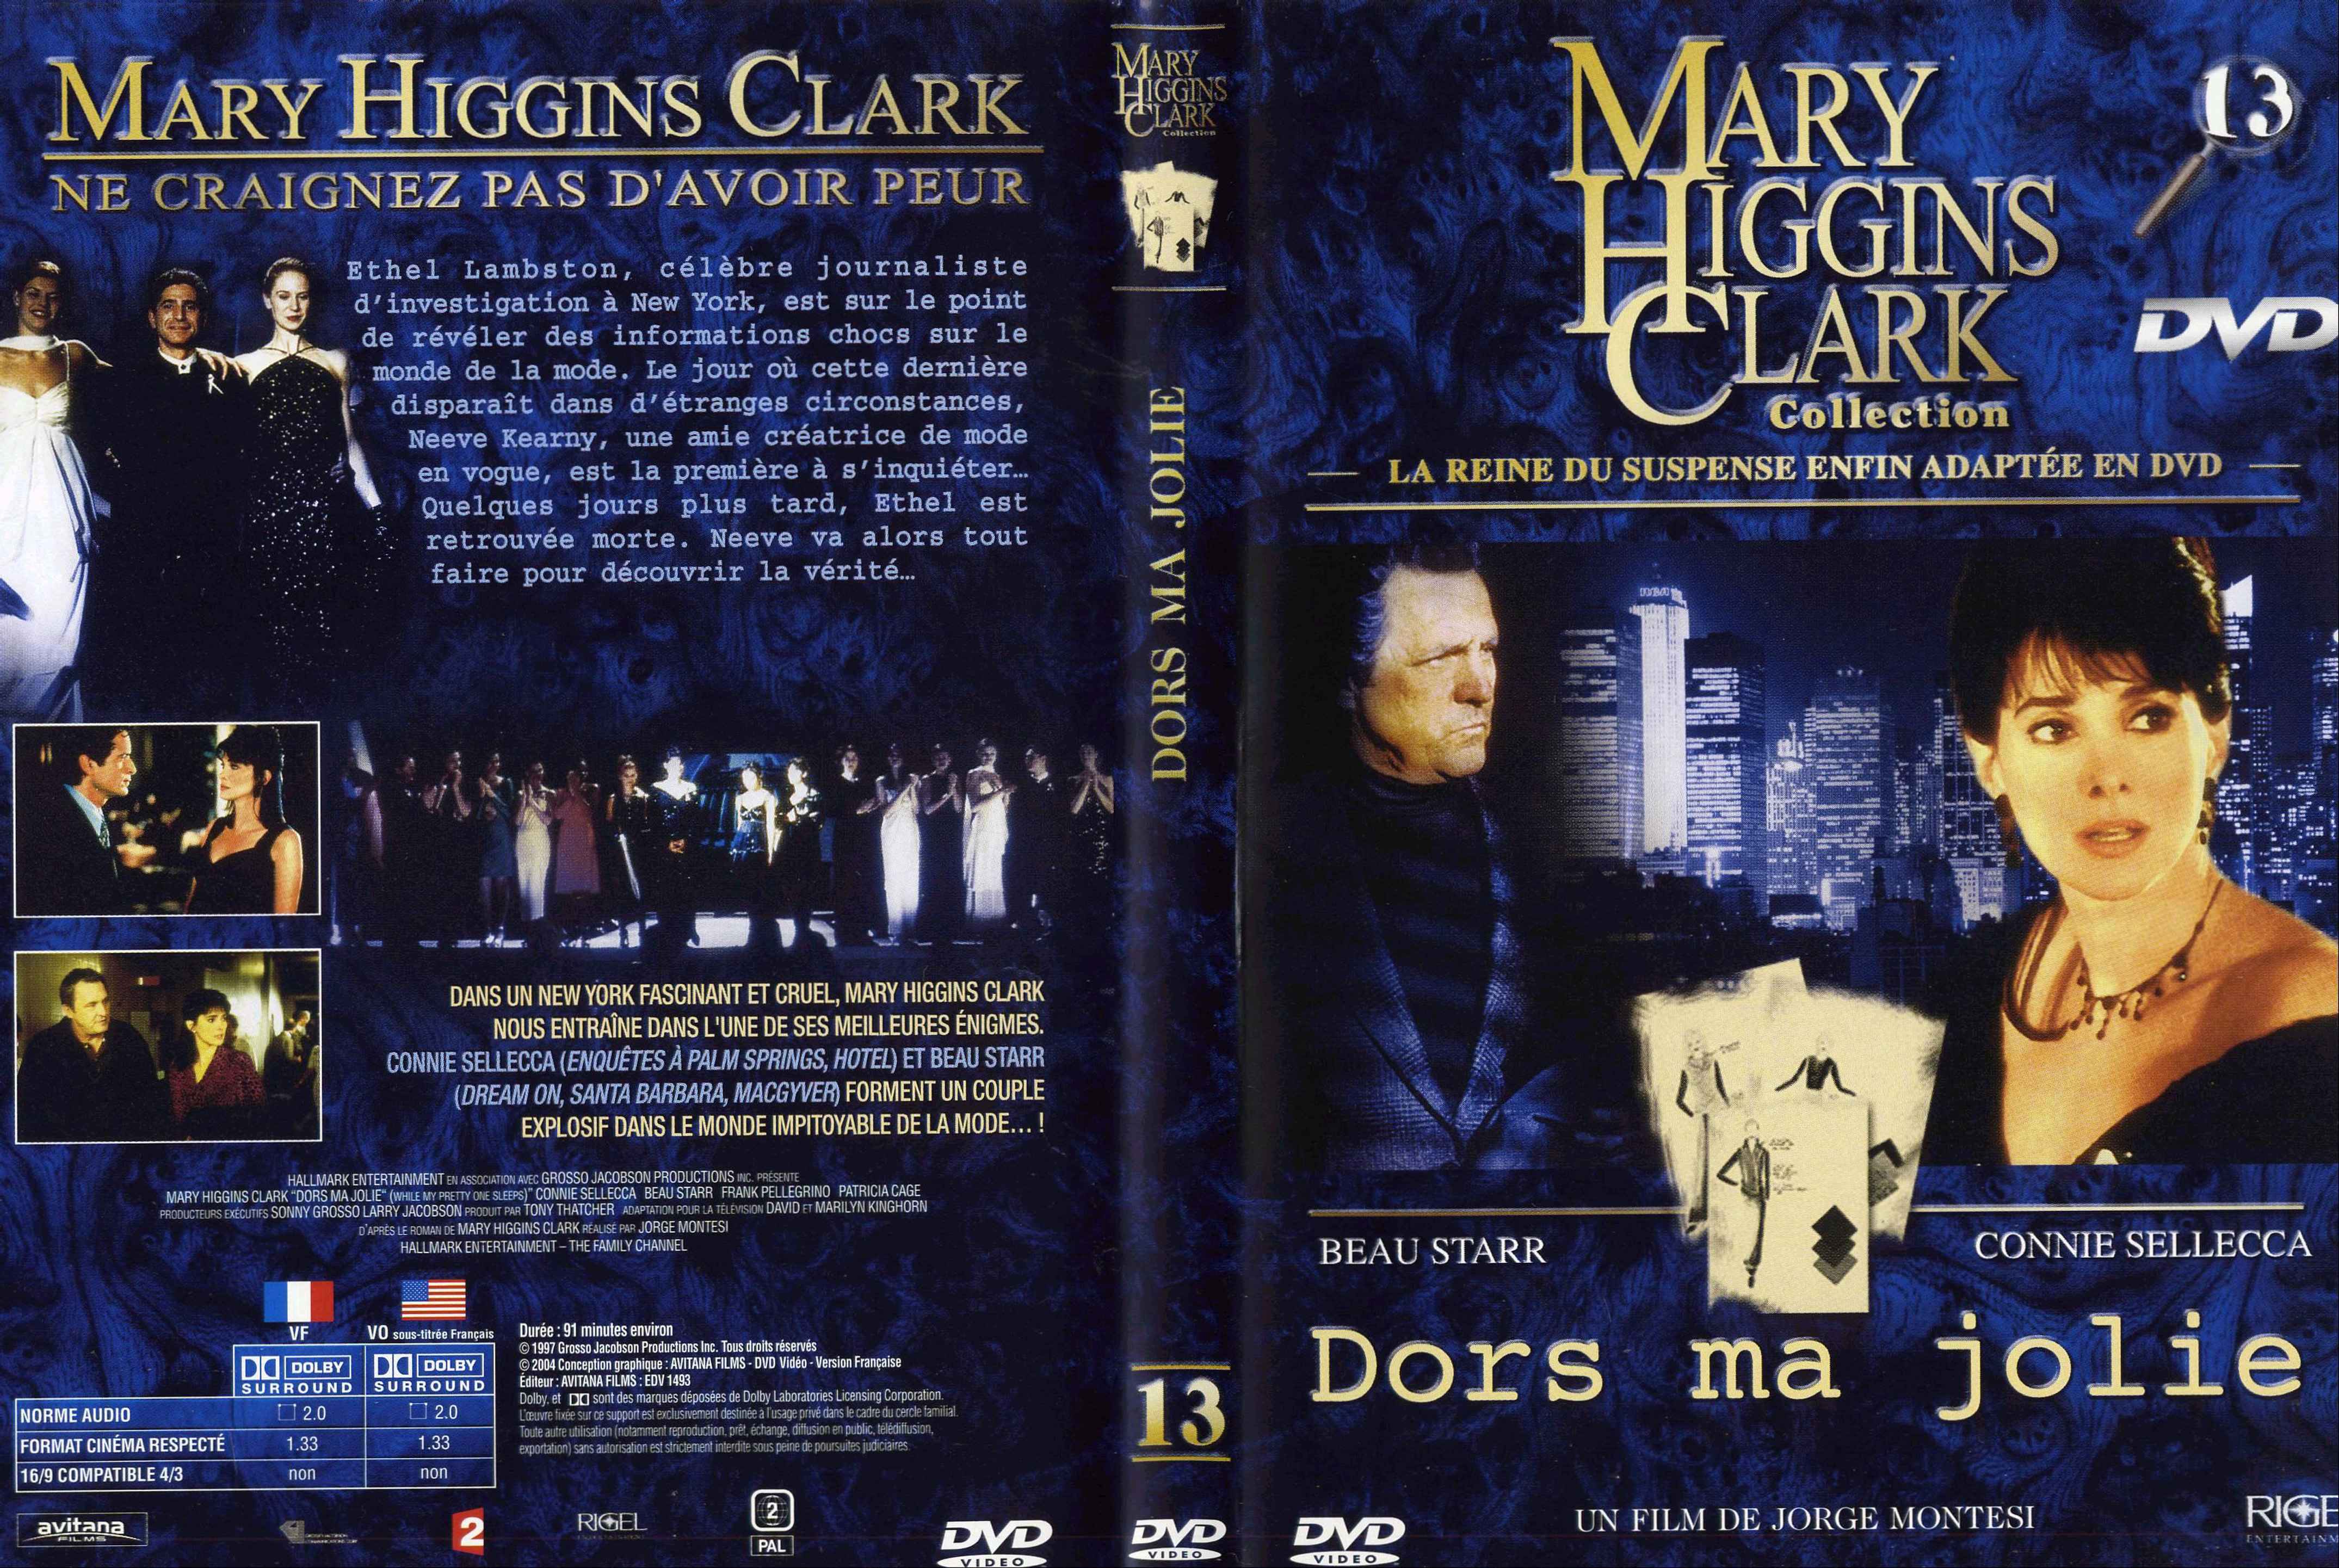 Jaquette DVD Mary Higgins Clark vol 13 - Dors ma jolie